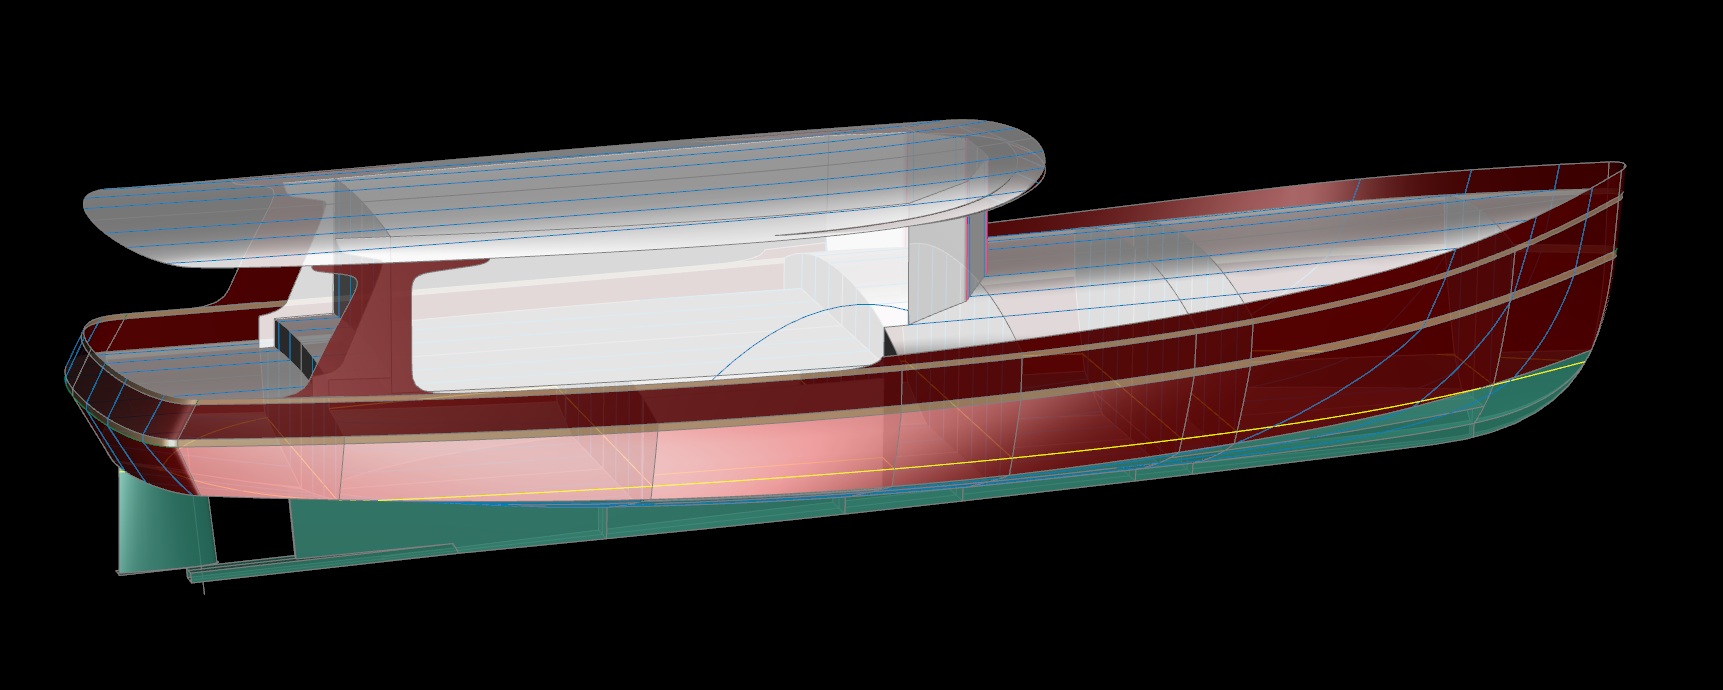 70' Motor Yacht - NOMAD - Kasten Marine Design, Inc.